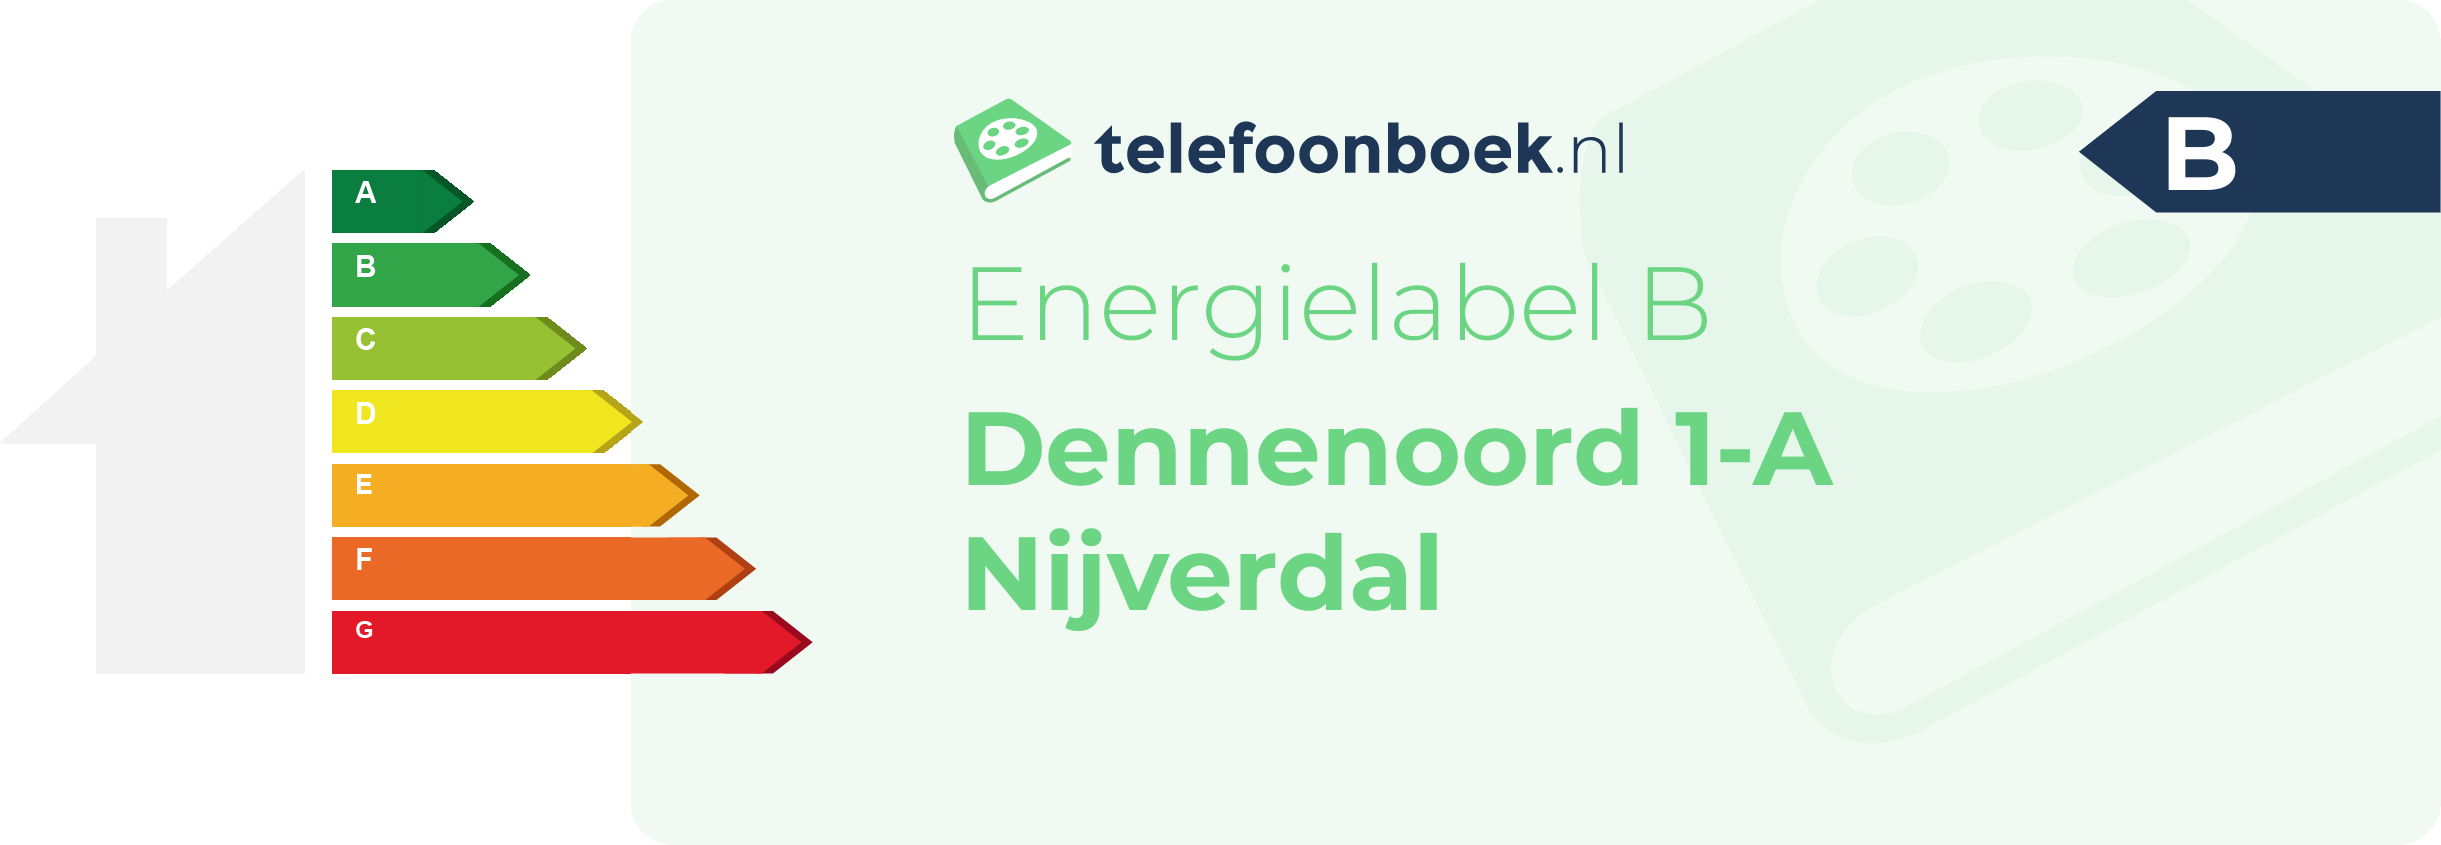 Energielabel Dennenoord 1-A Nijverdal